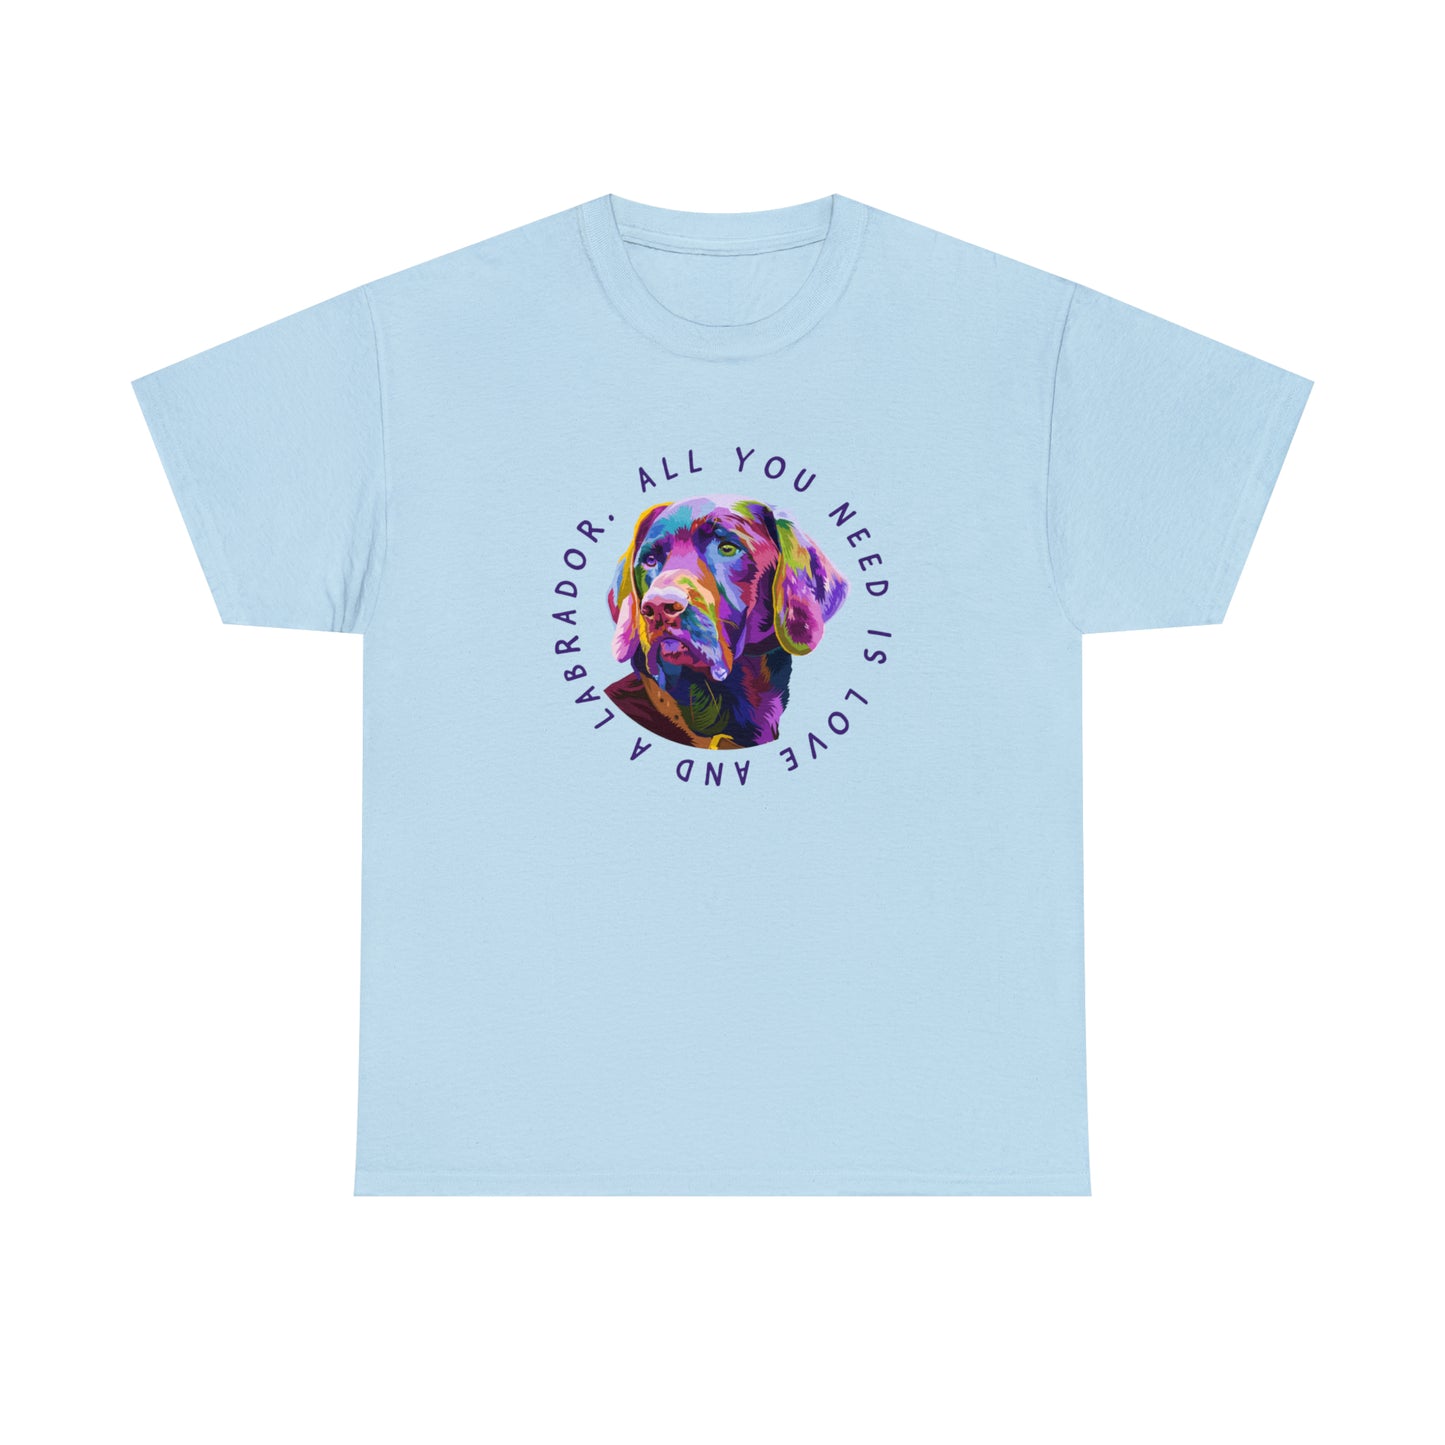 Labrador T-Shirt For Lab Lovers TShirt For Favorite Dog Breed T Shirt For Labrador Retriever Gift